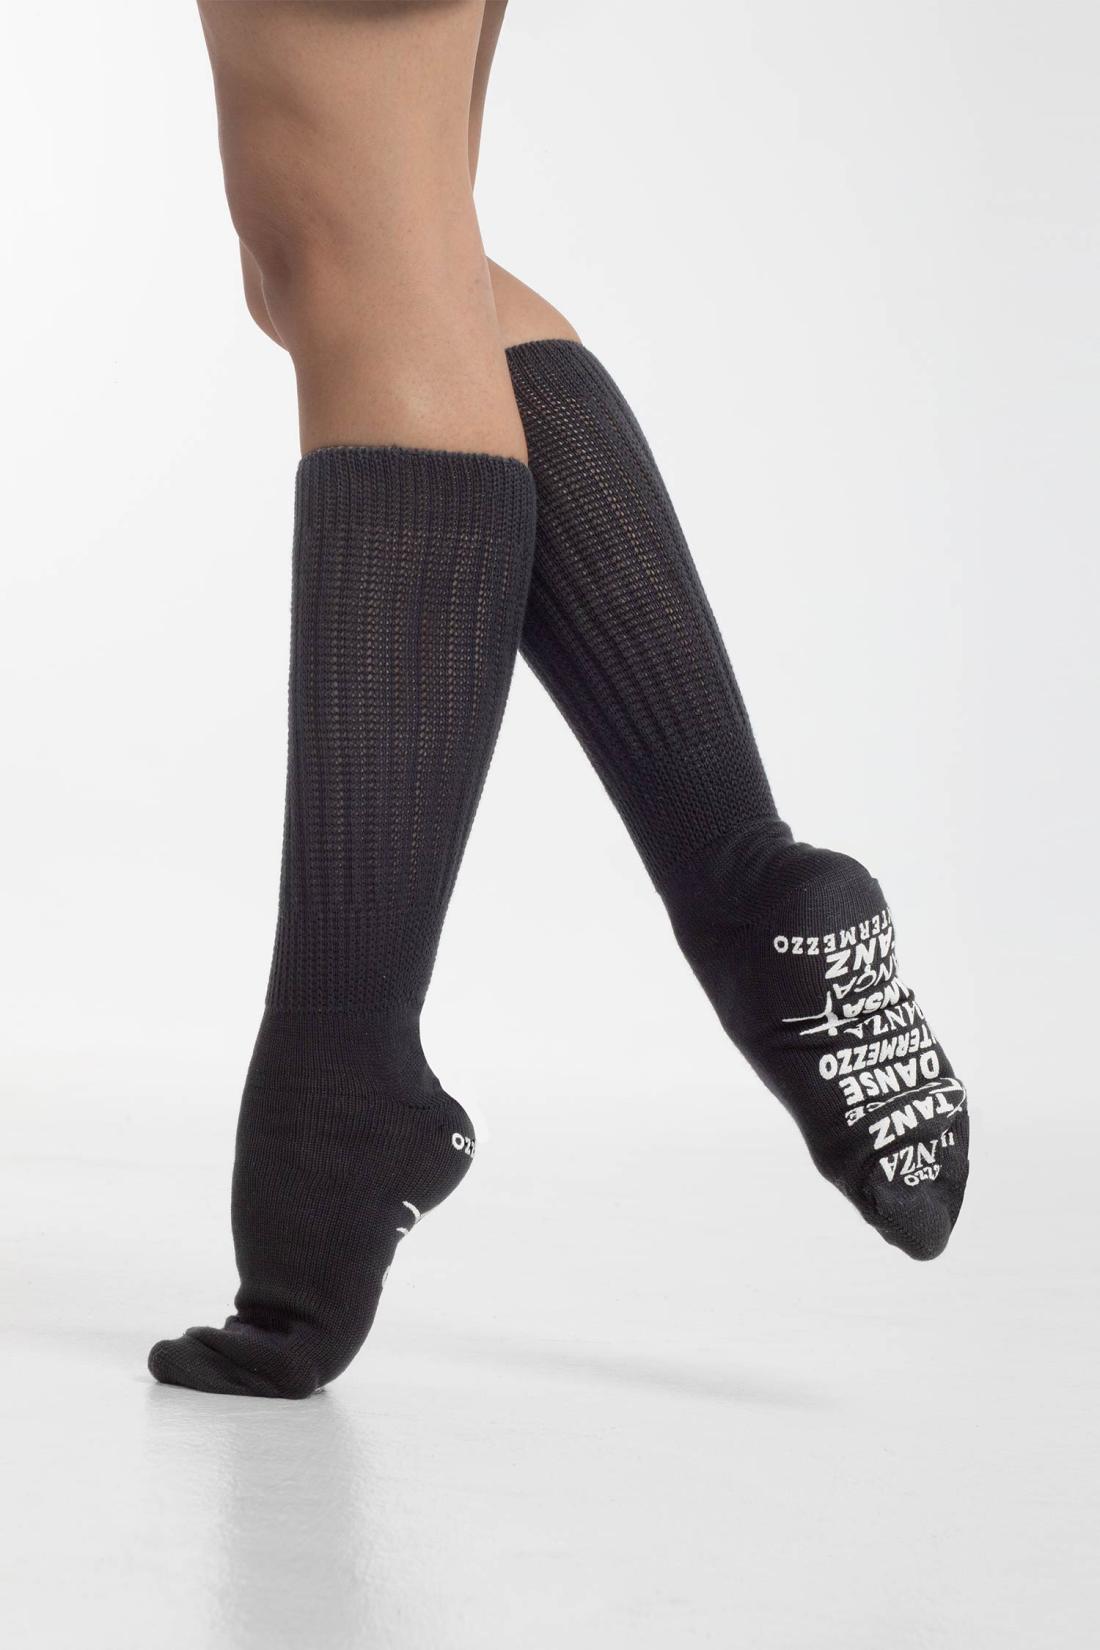 Calcetines antideslizantes para bailarinas de fitness negros para mujer 500  - Decathlon